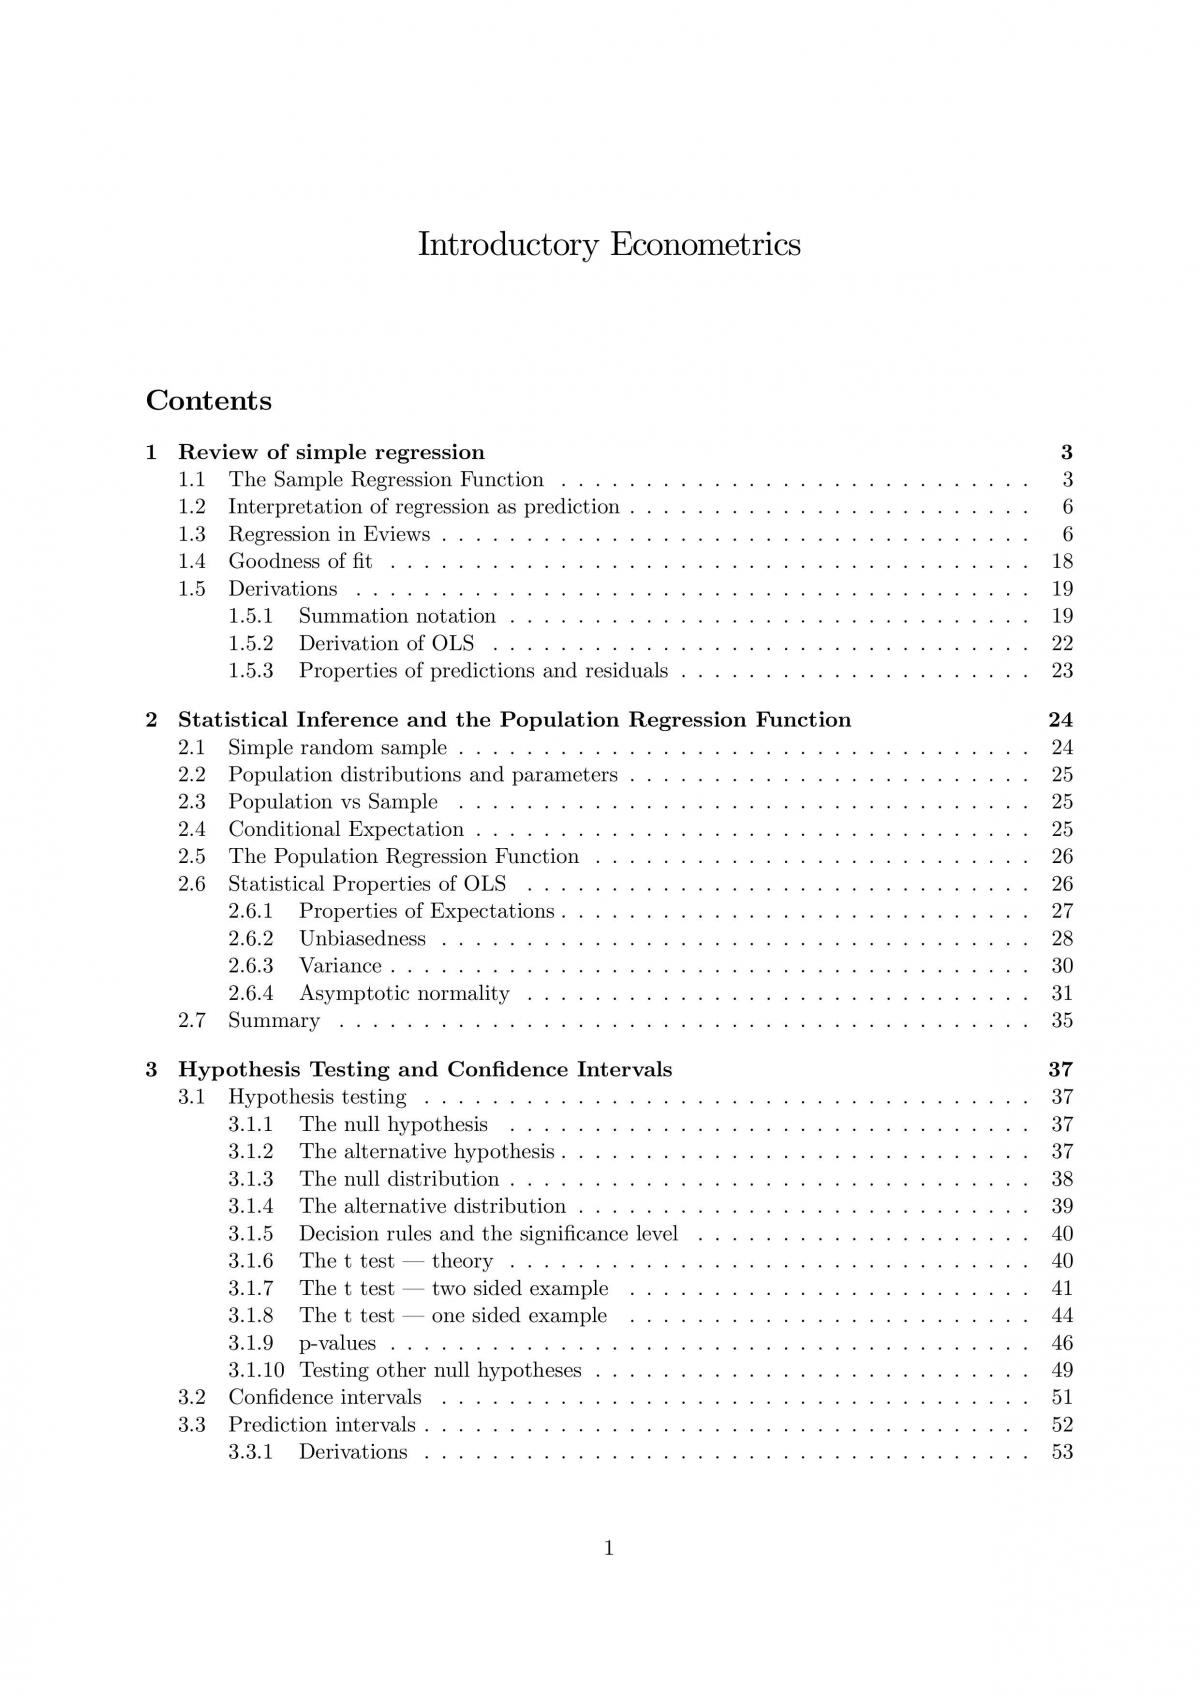 Comprehensive Introductory Econometrics Notes - ETC2410 - ETC1000 - Page 1